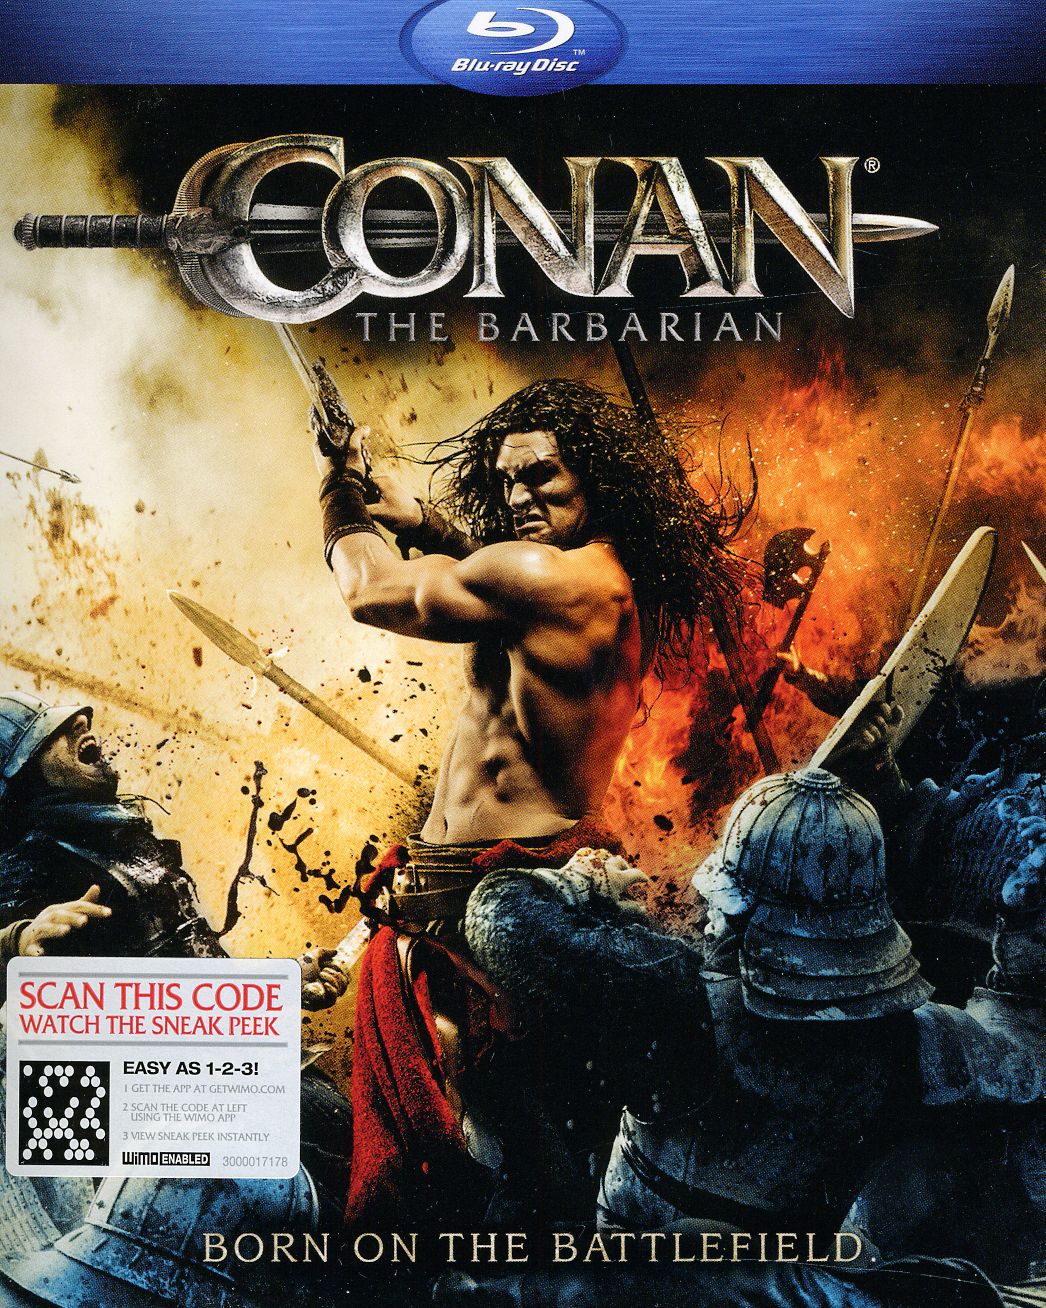 CONAN THE BARBARIAN (2011) / (DTS SUB WS)